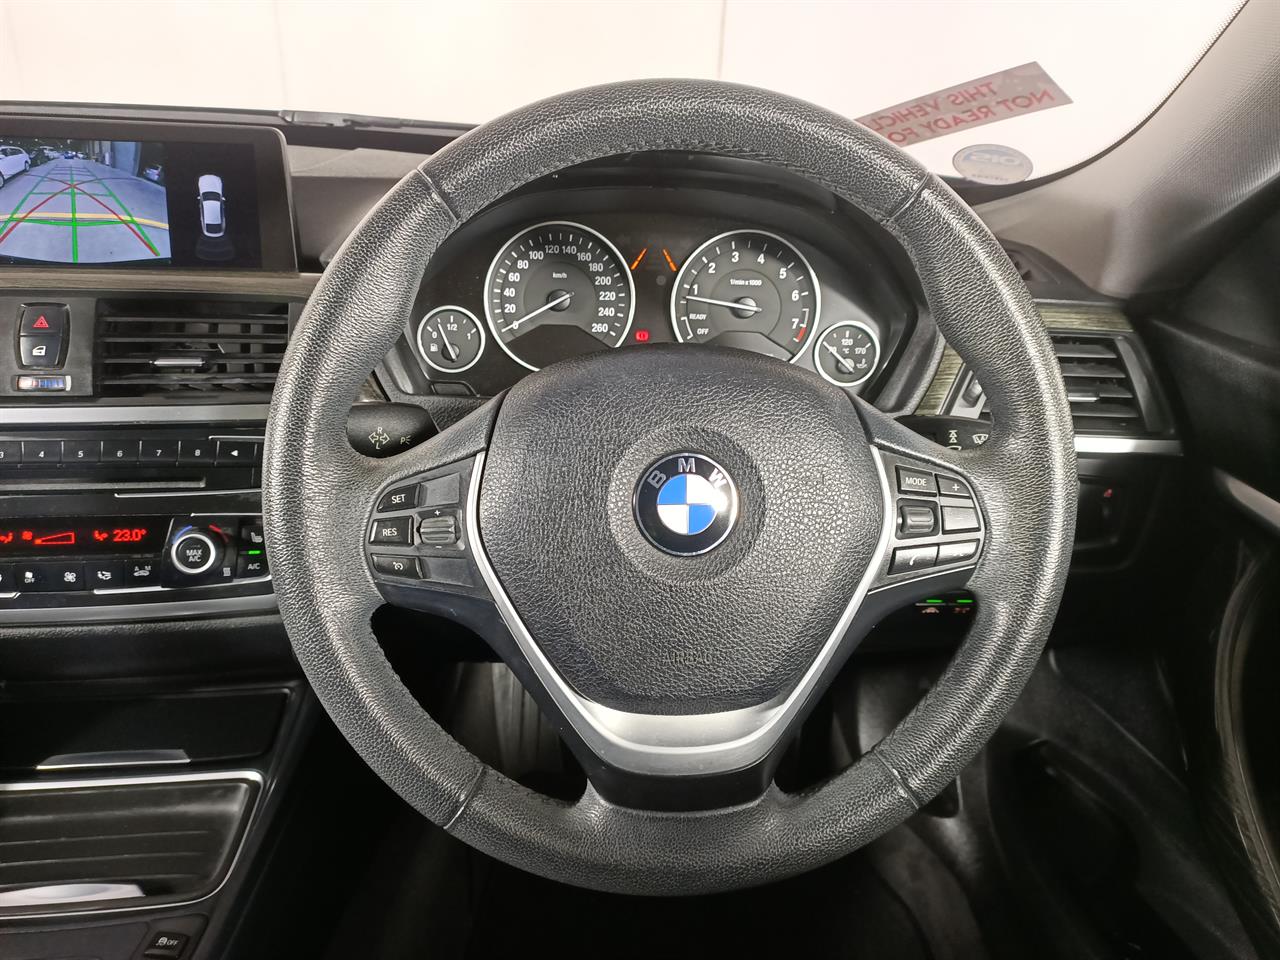 2014 BMW 320i Gran Turismo